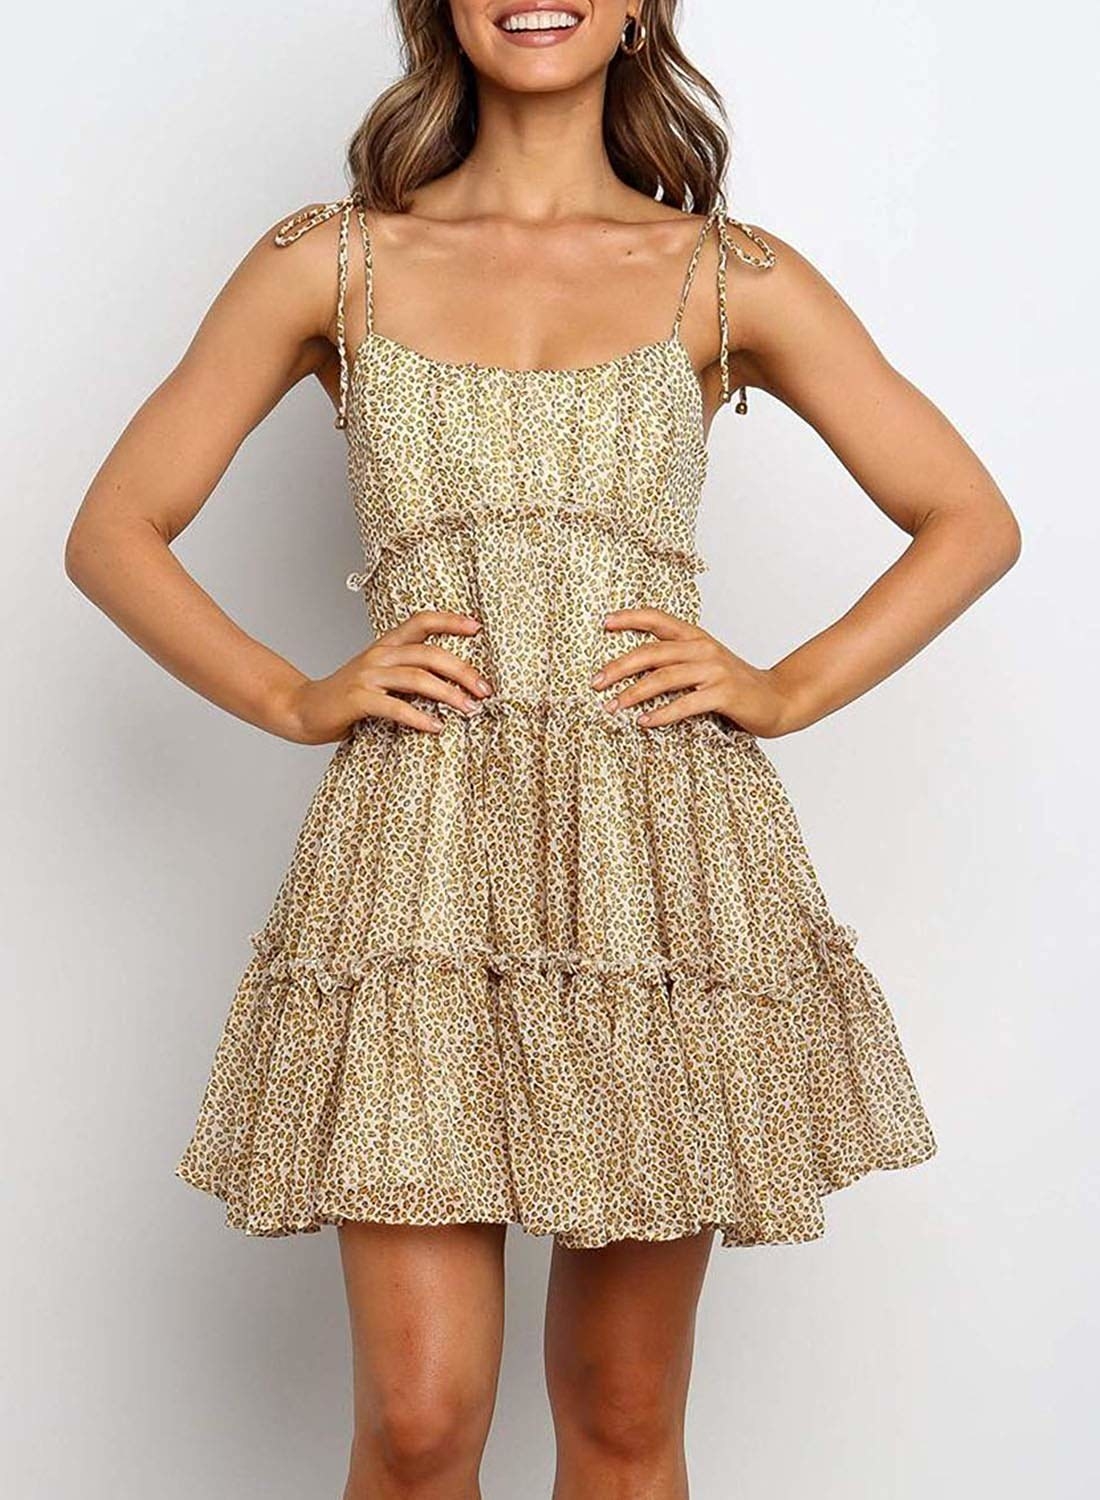 buzzfeed amazon summer dresses